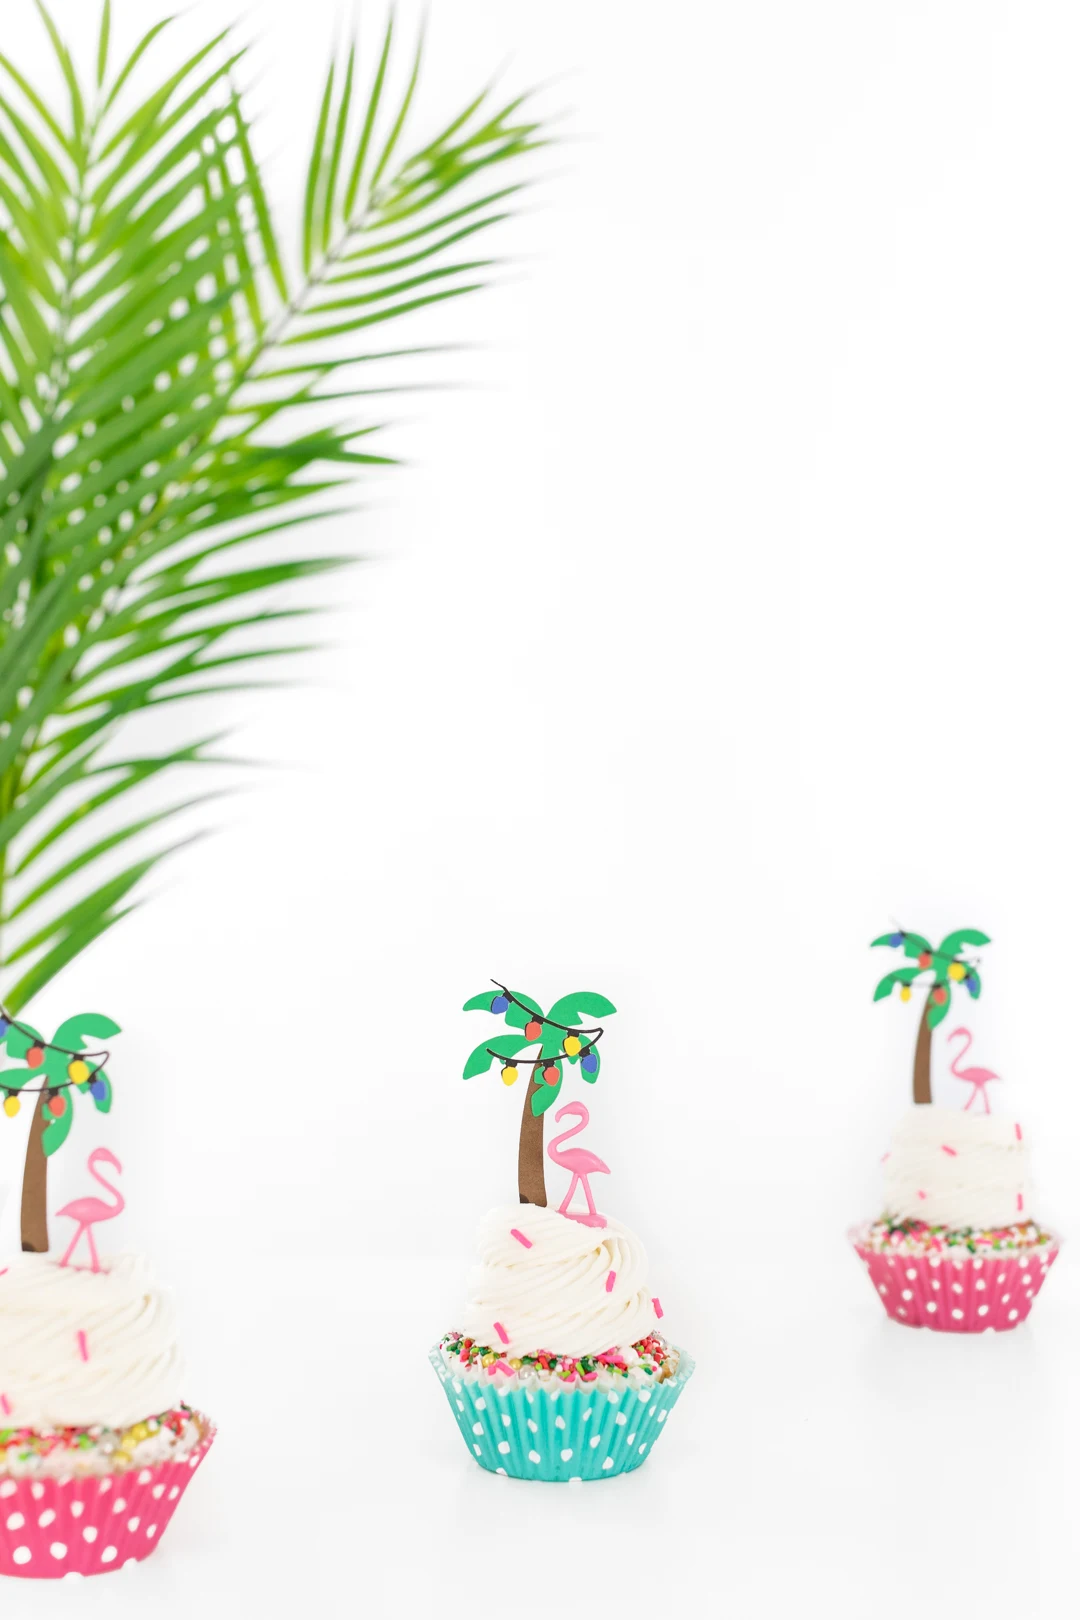 tropical christmas dessert idea with palm trees and flamingos